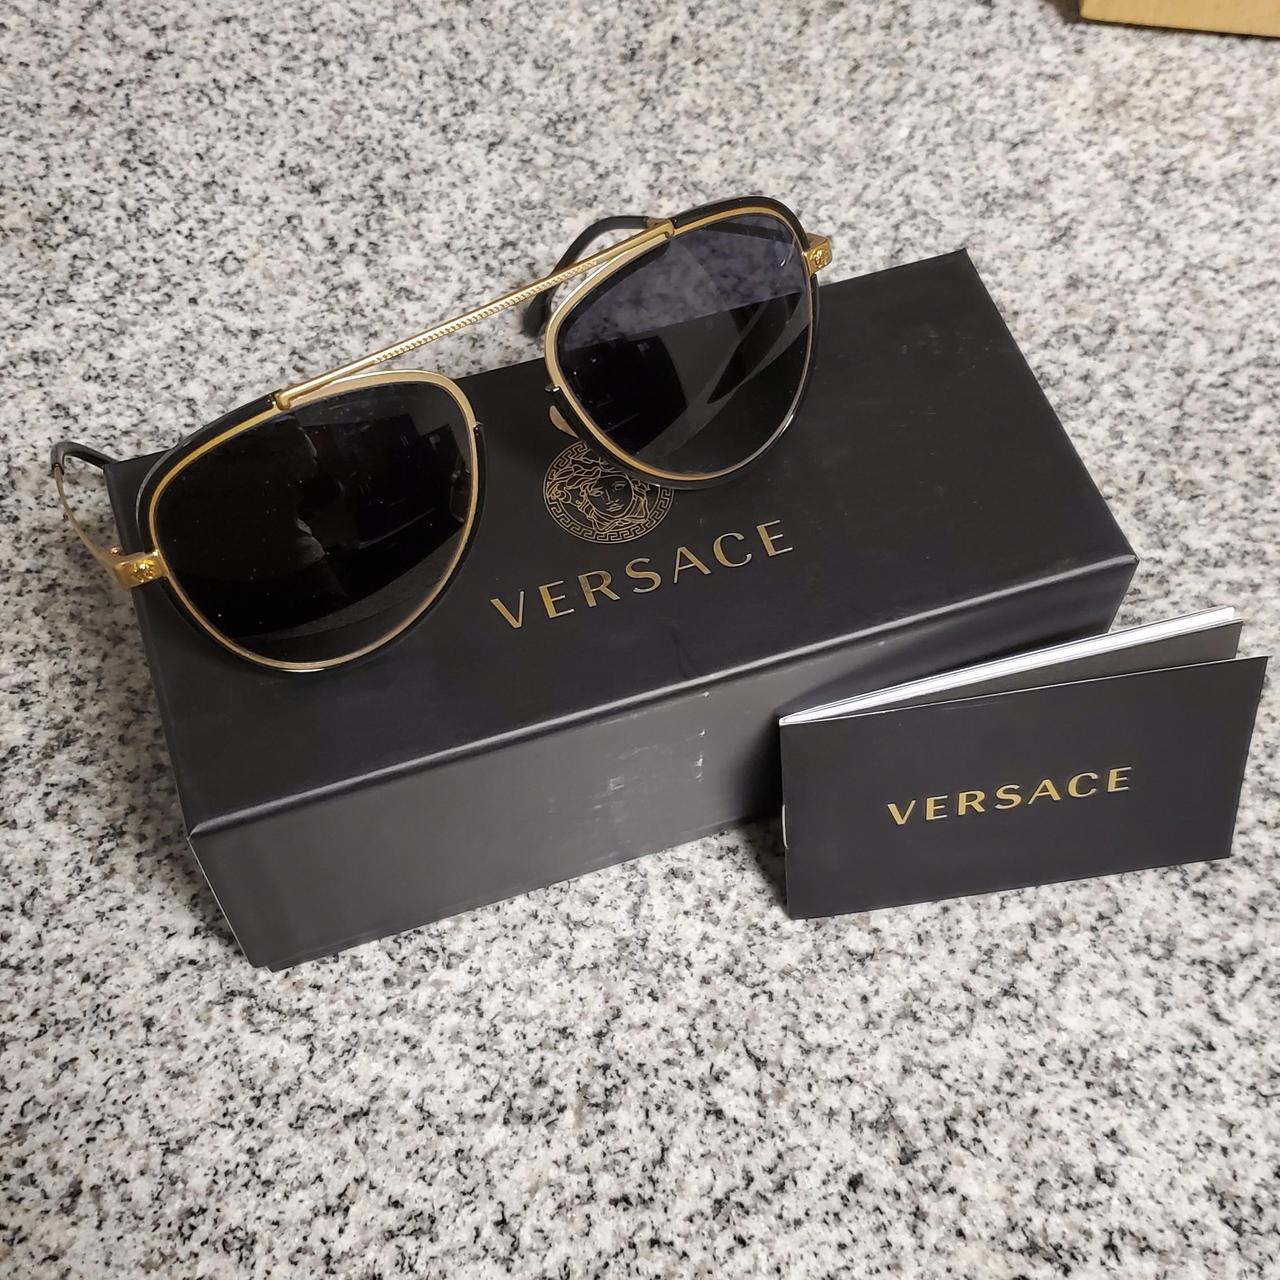 Versace Men's Black and Gold Sunglasses | Depop